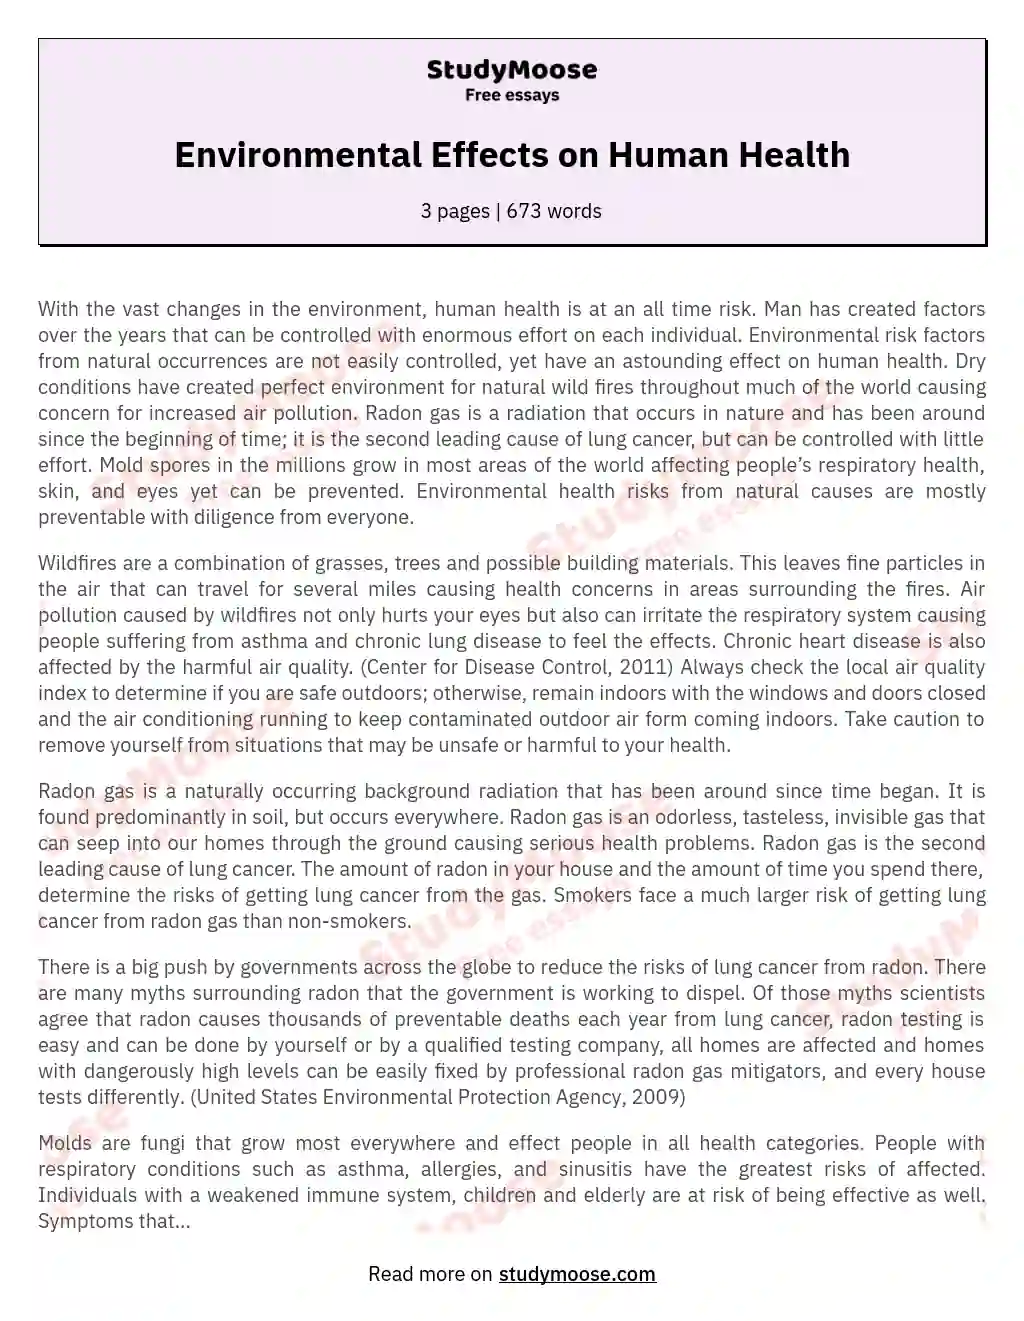 Environmental Effects on Human Health essay